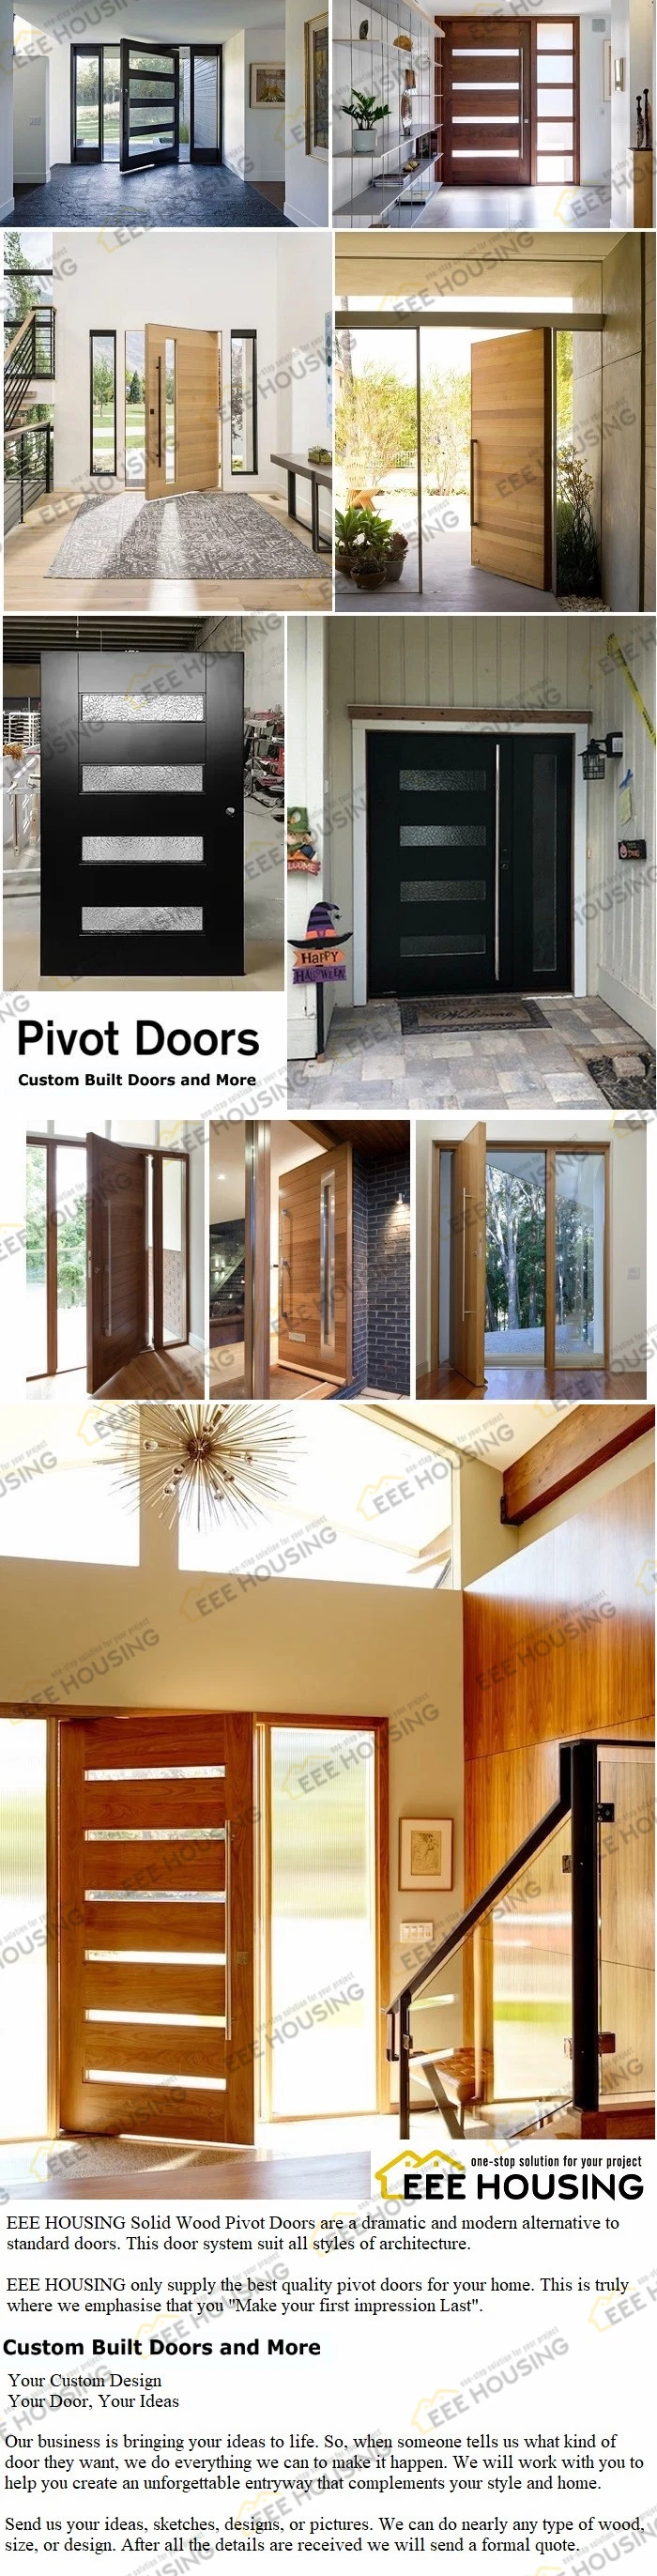 China Factory Direct Supply Exterior Pivot Door with Wood, Glass &amp; Metal Front Entry Door Design